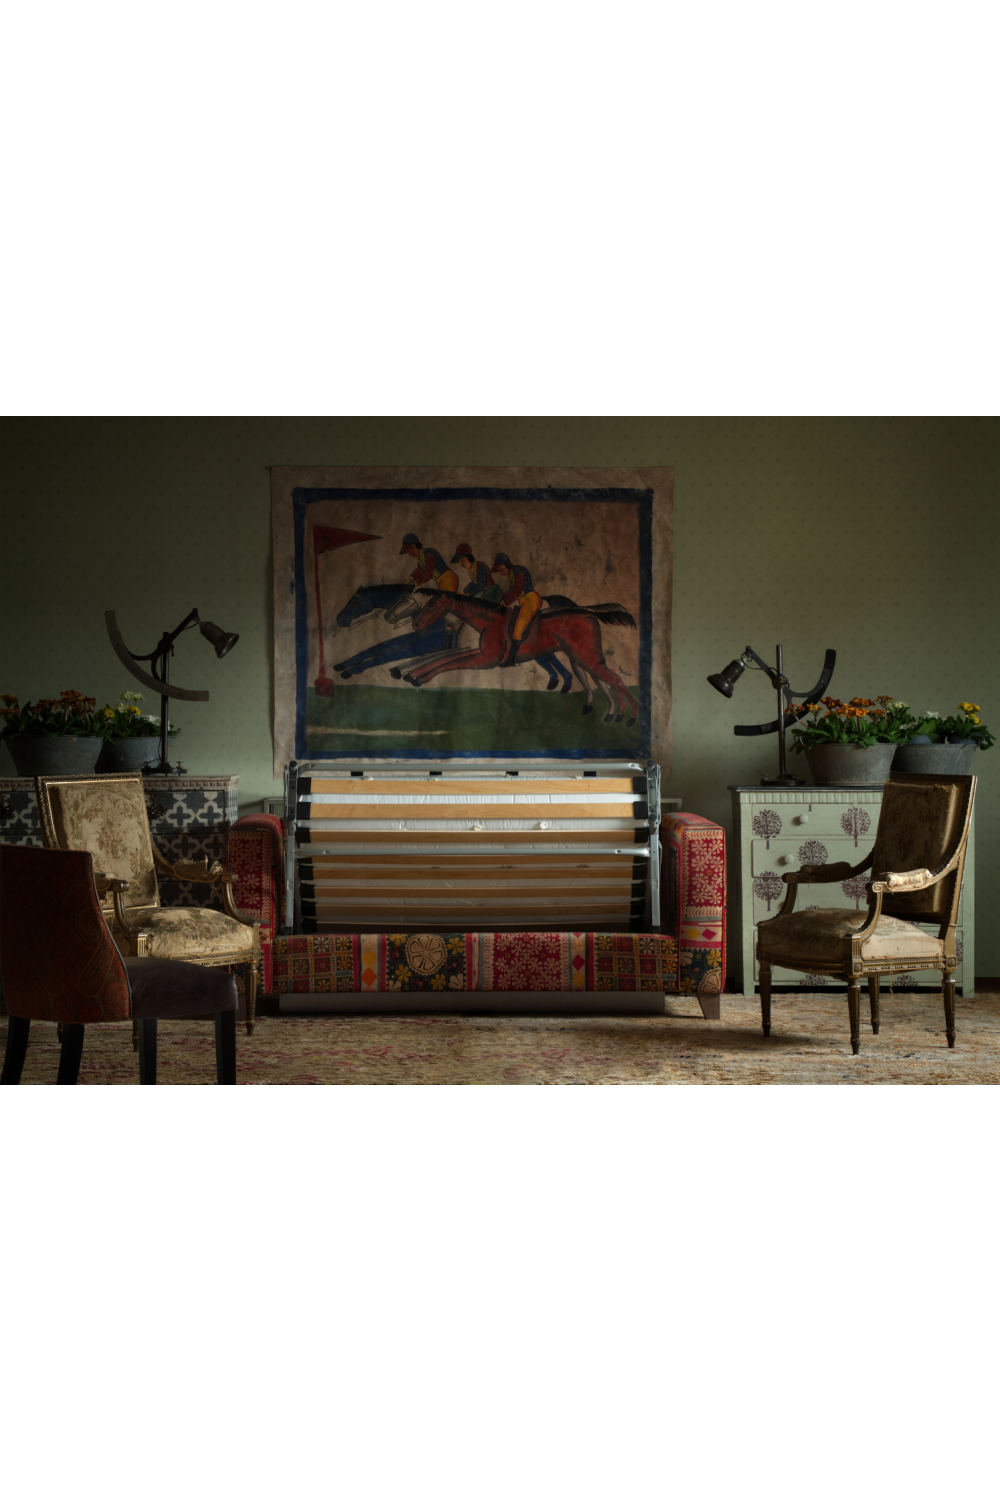 Modern Minimalist Sofa Bed | Andrew Martin Silas | Oroa.com